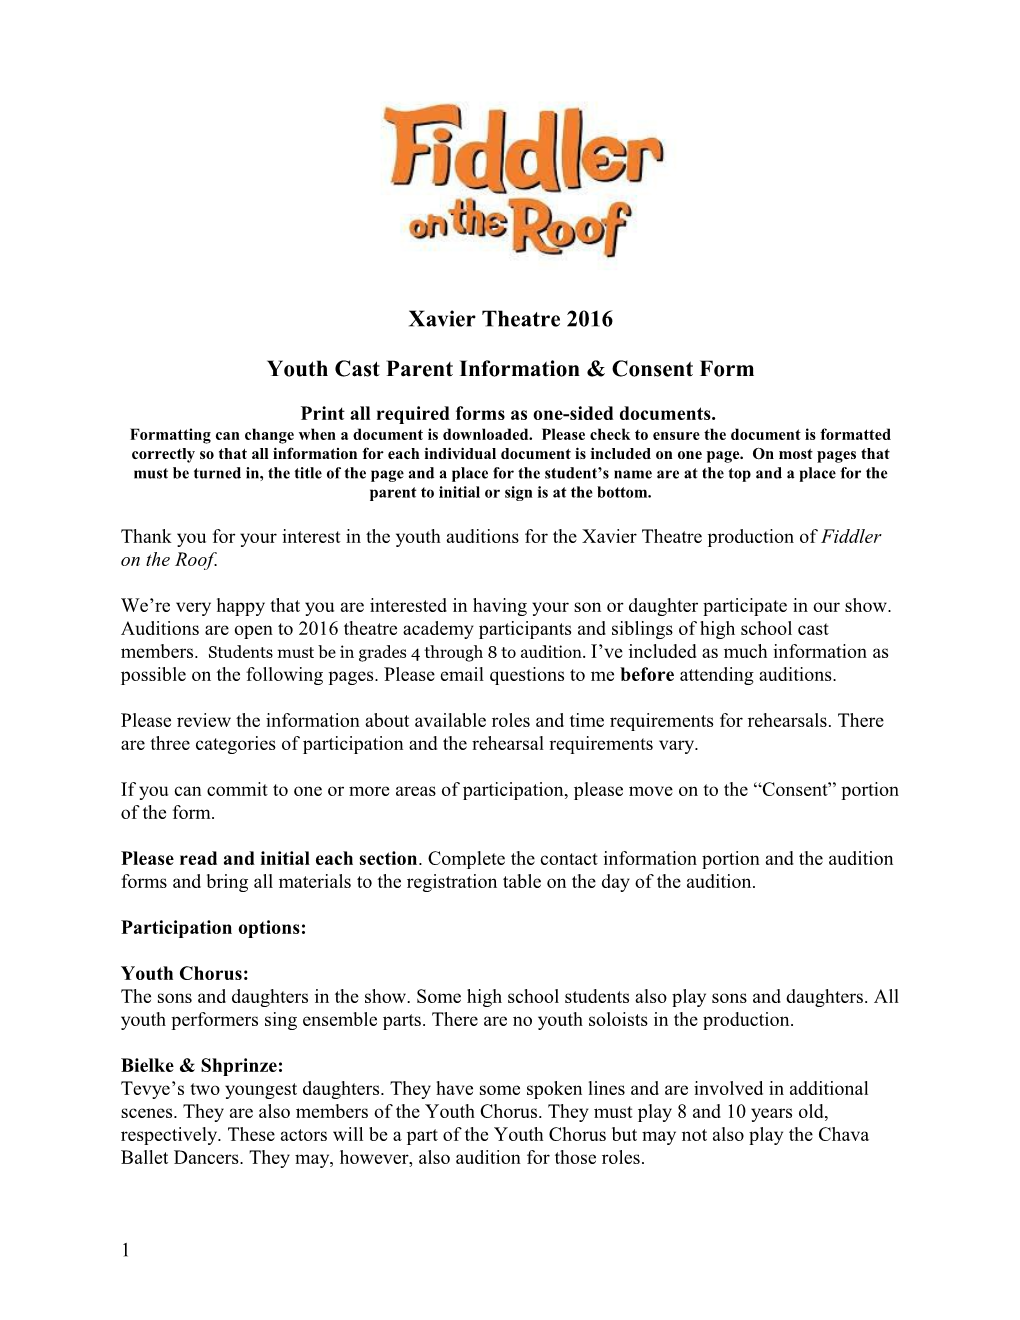 Youth Cast Parent Information & Consent Form